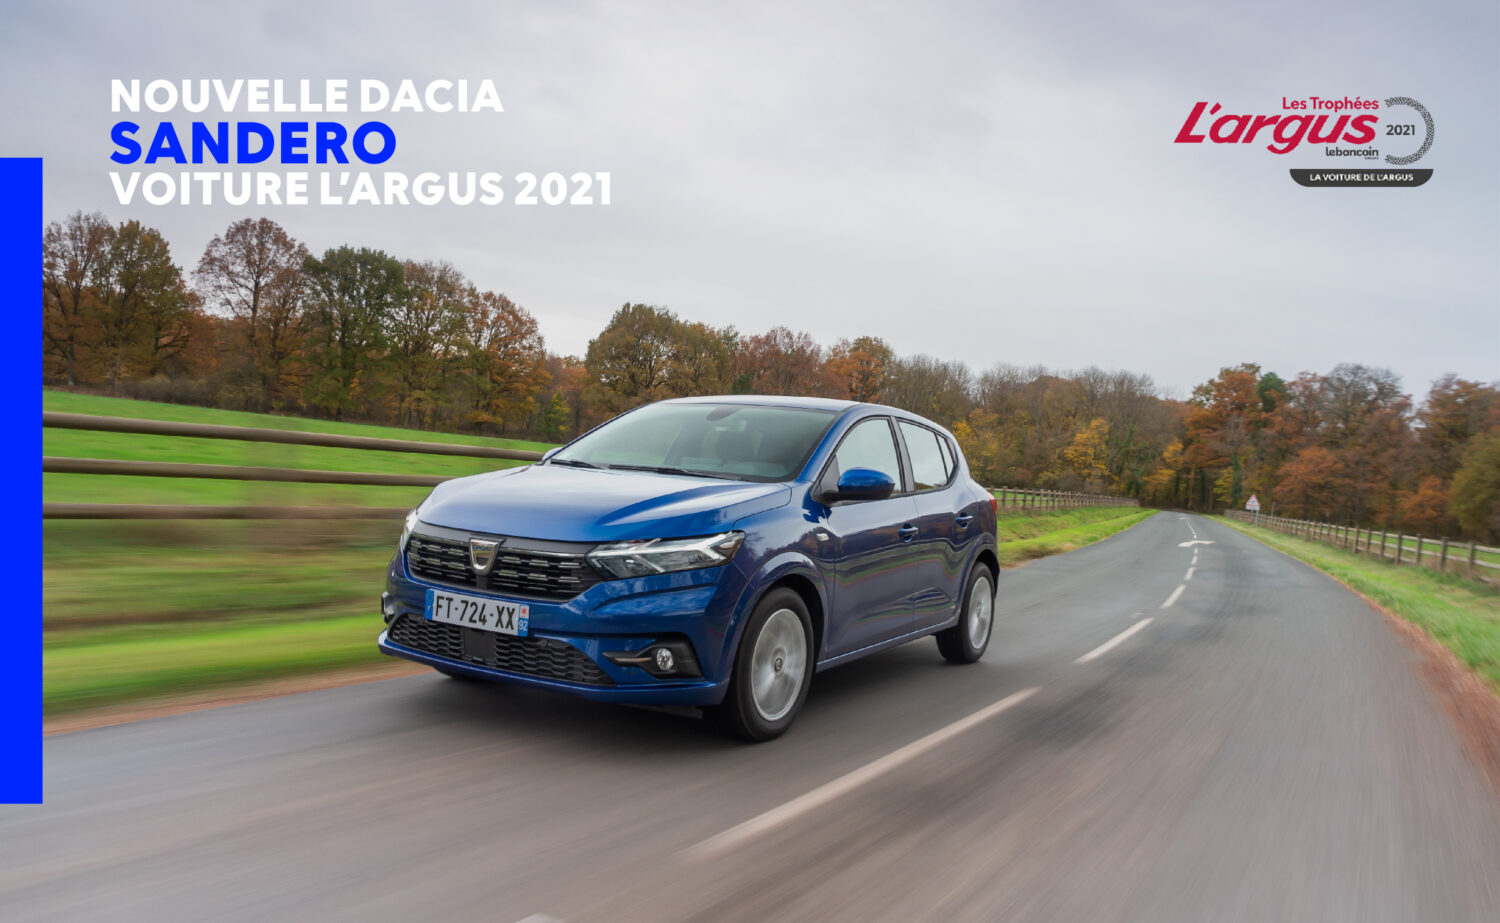 2021 - Dacia Sandero Argus Car of 2021